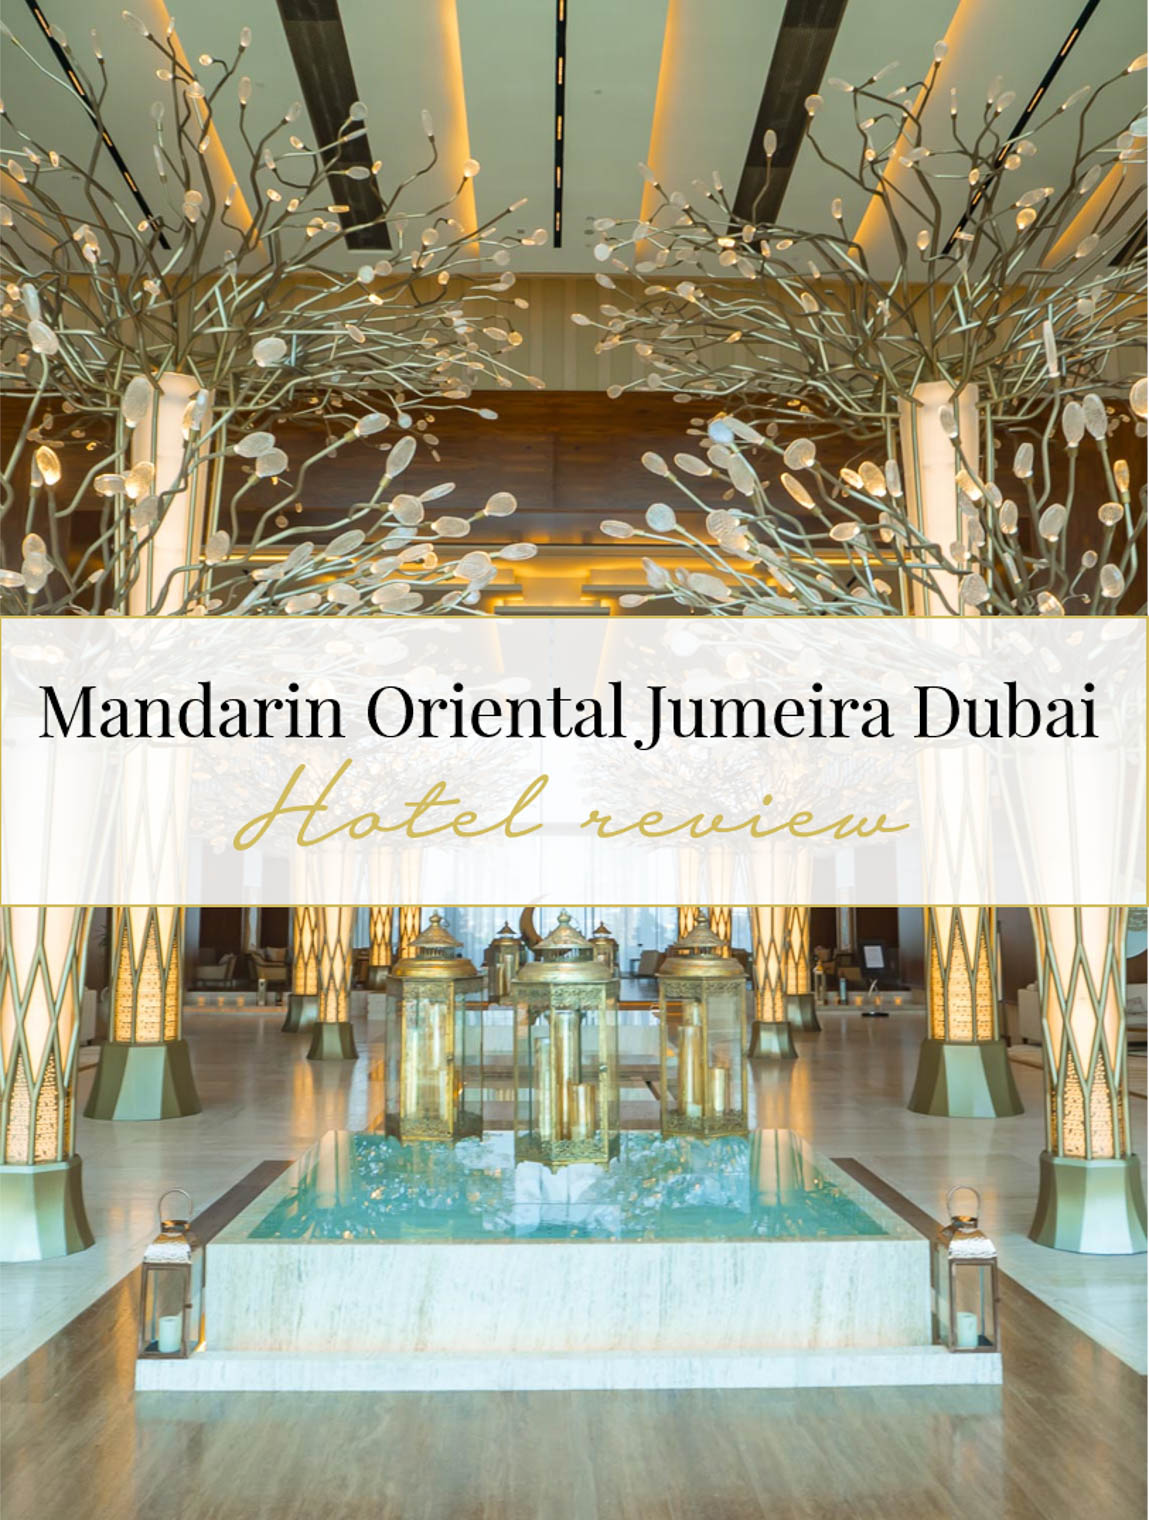 Hotel review Mandarin Oriental Jumeira Dubai 